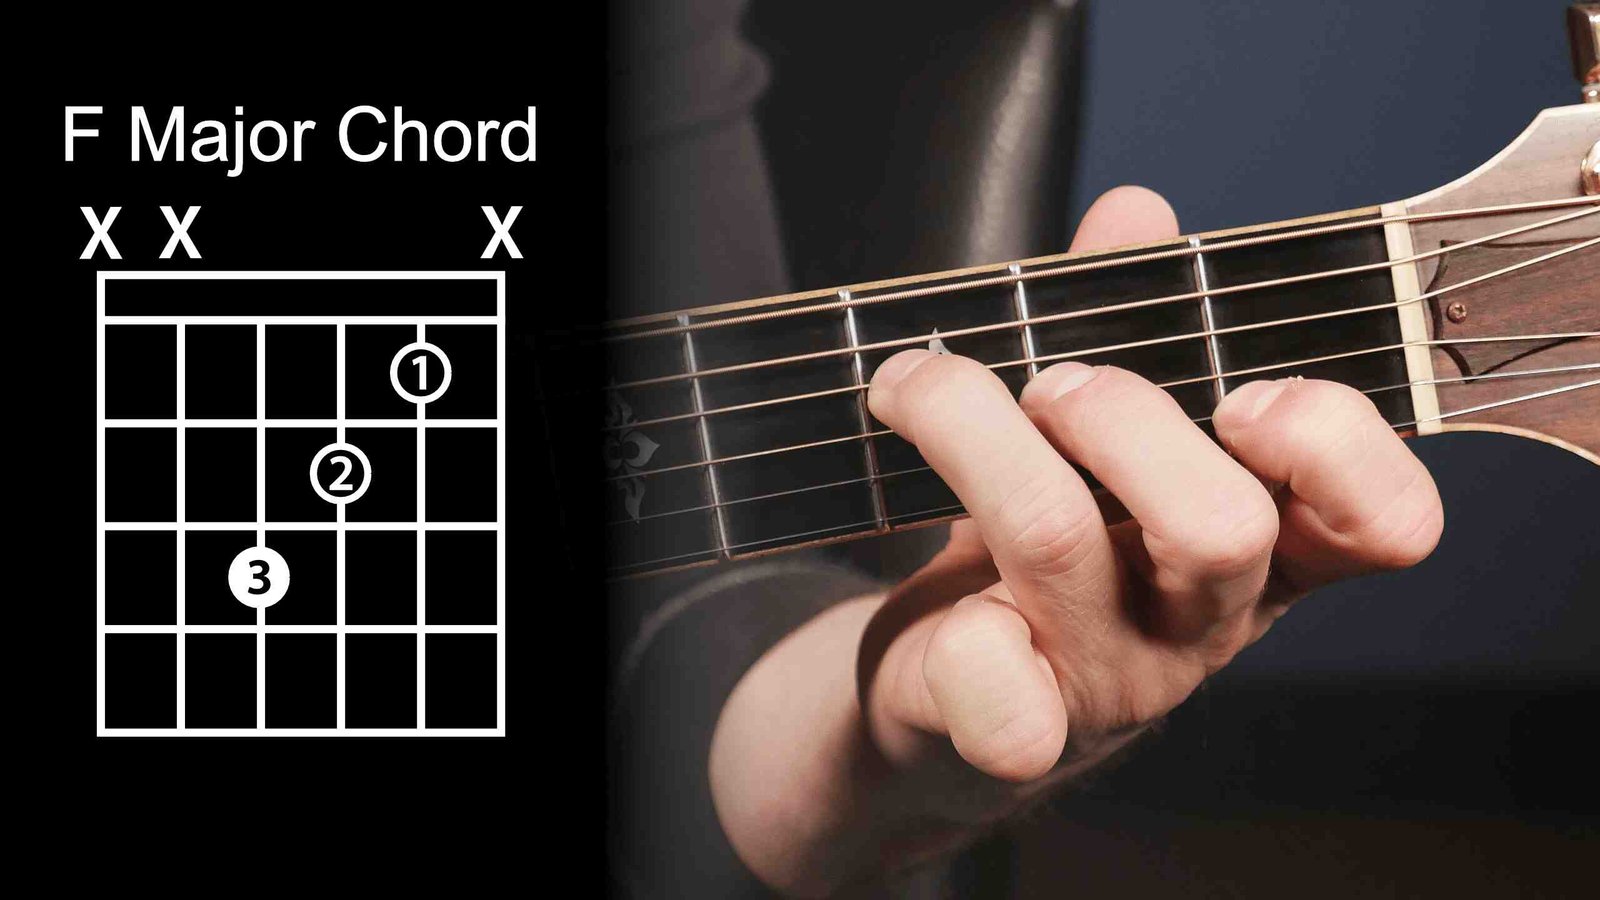 F major chord